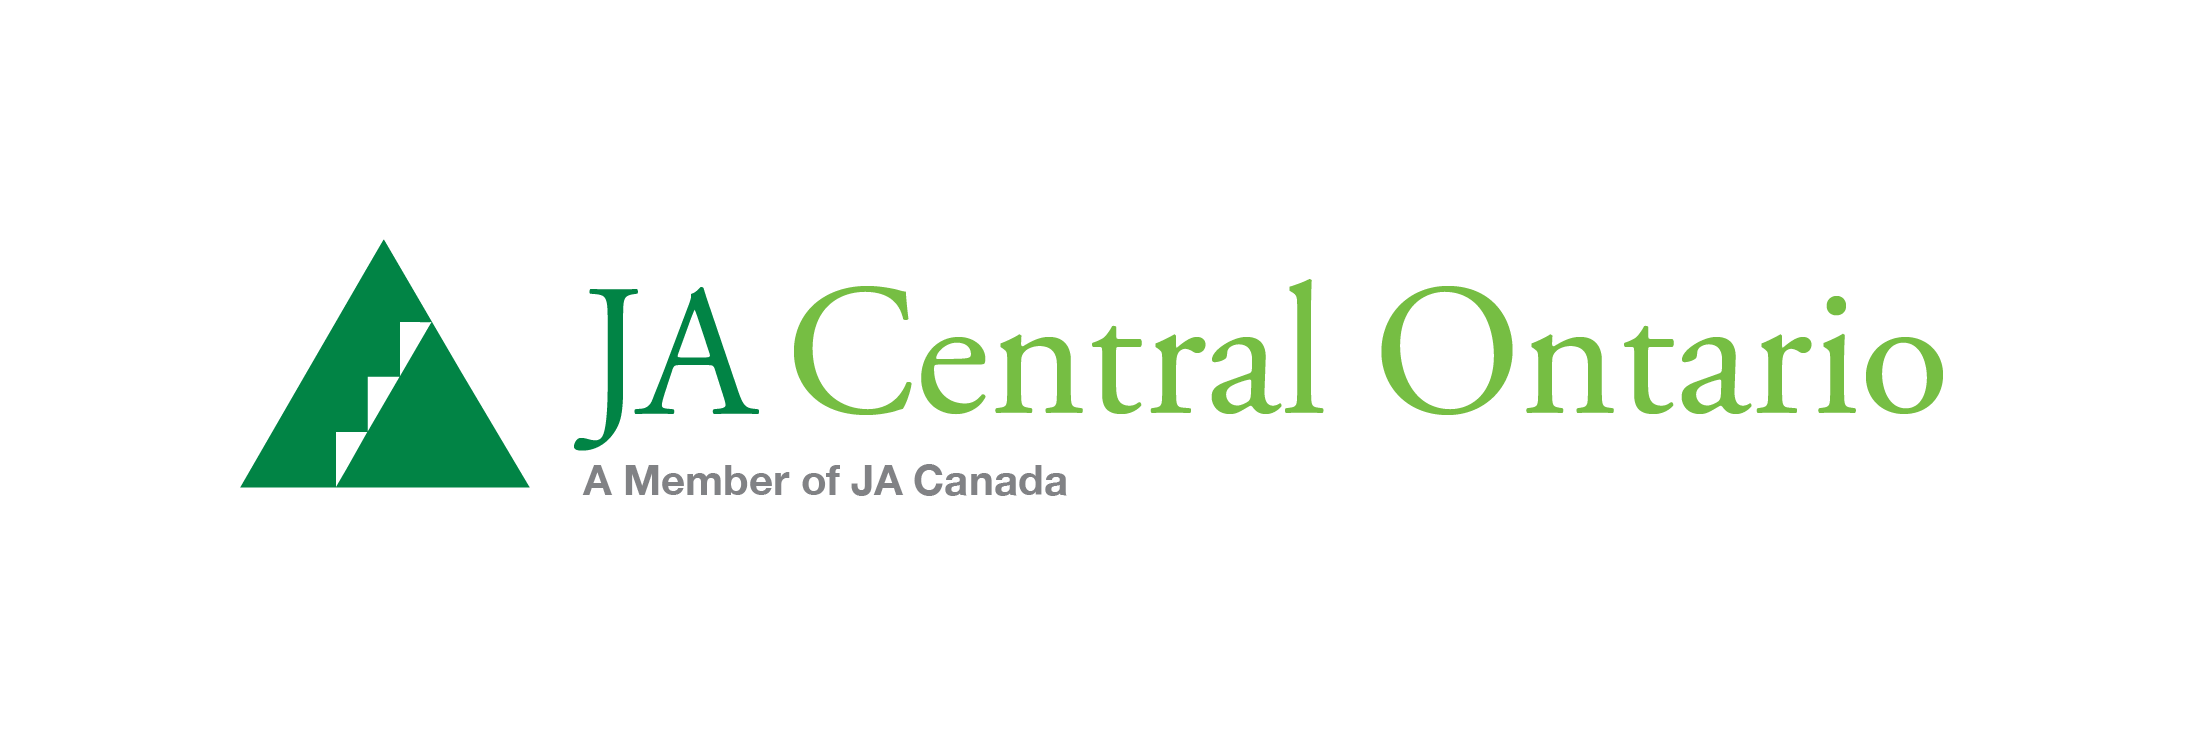 JA Central Ontario Logo